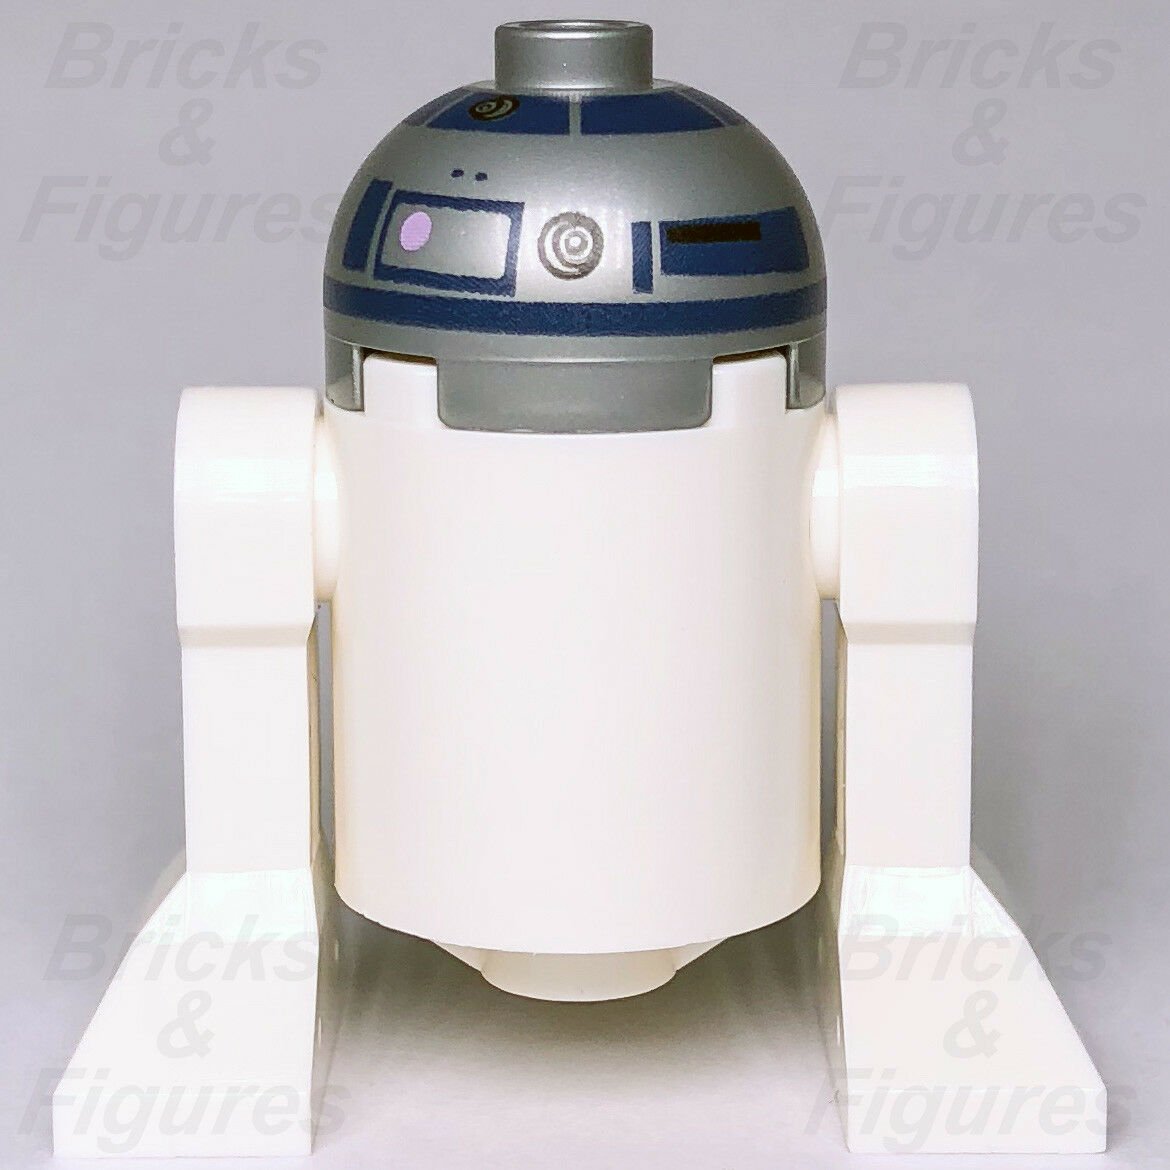 New Star Wars LEGO R2-D2 Astromech Droid Minifigure R2D2 75136 75092 75096 - Bricks & Figures